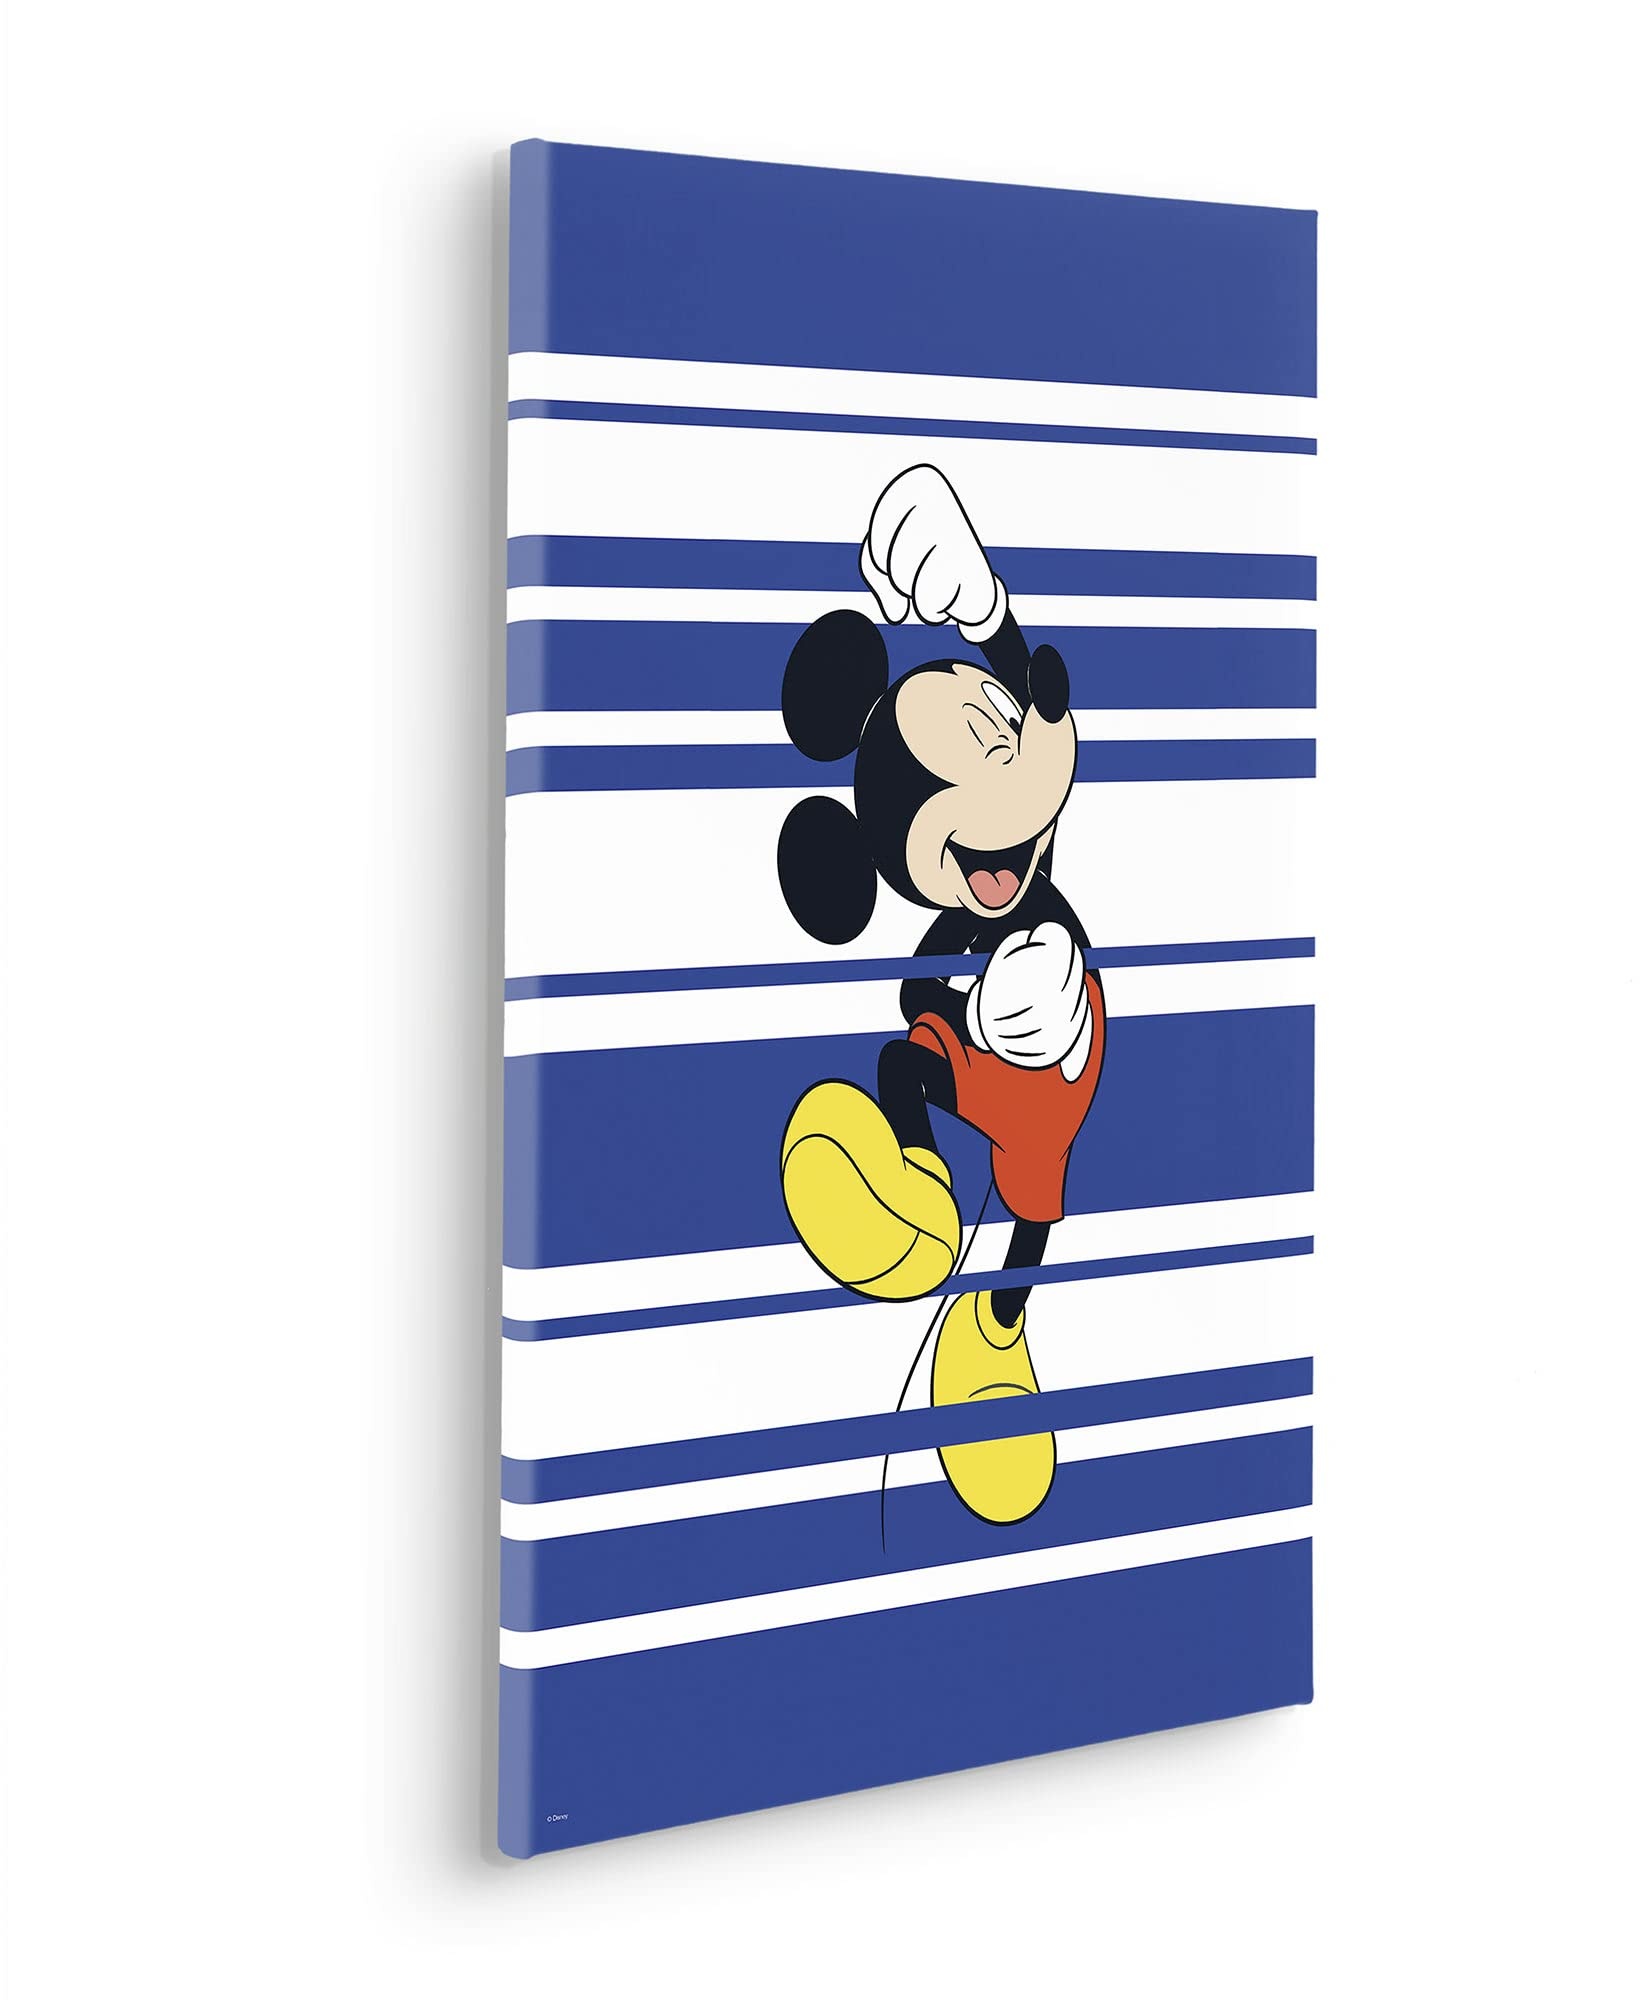 Komar Keilrahmenbild im Echtholzrahmen - Mickey Rockstar - Größe 40 x 60 cm - Disney, Kinderzimmer, Wandbild, Kunstdruck, Wanddekoration, Design